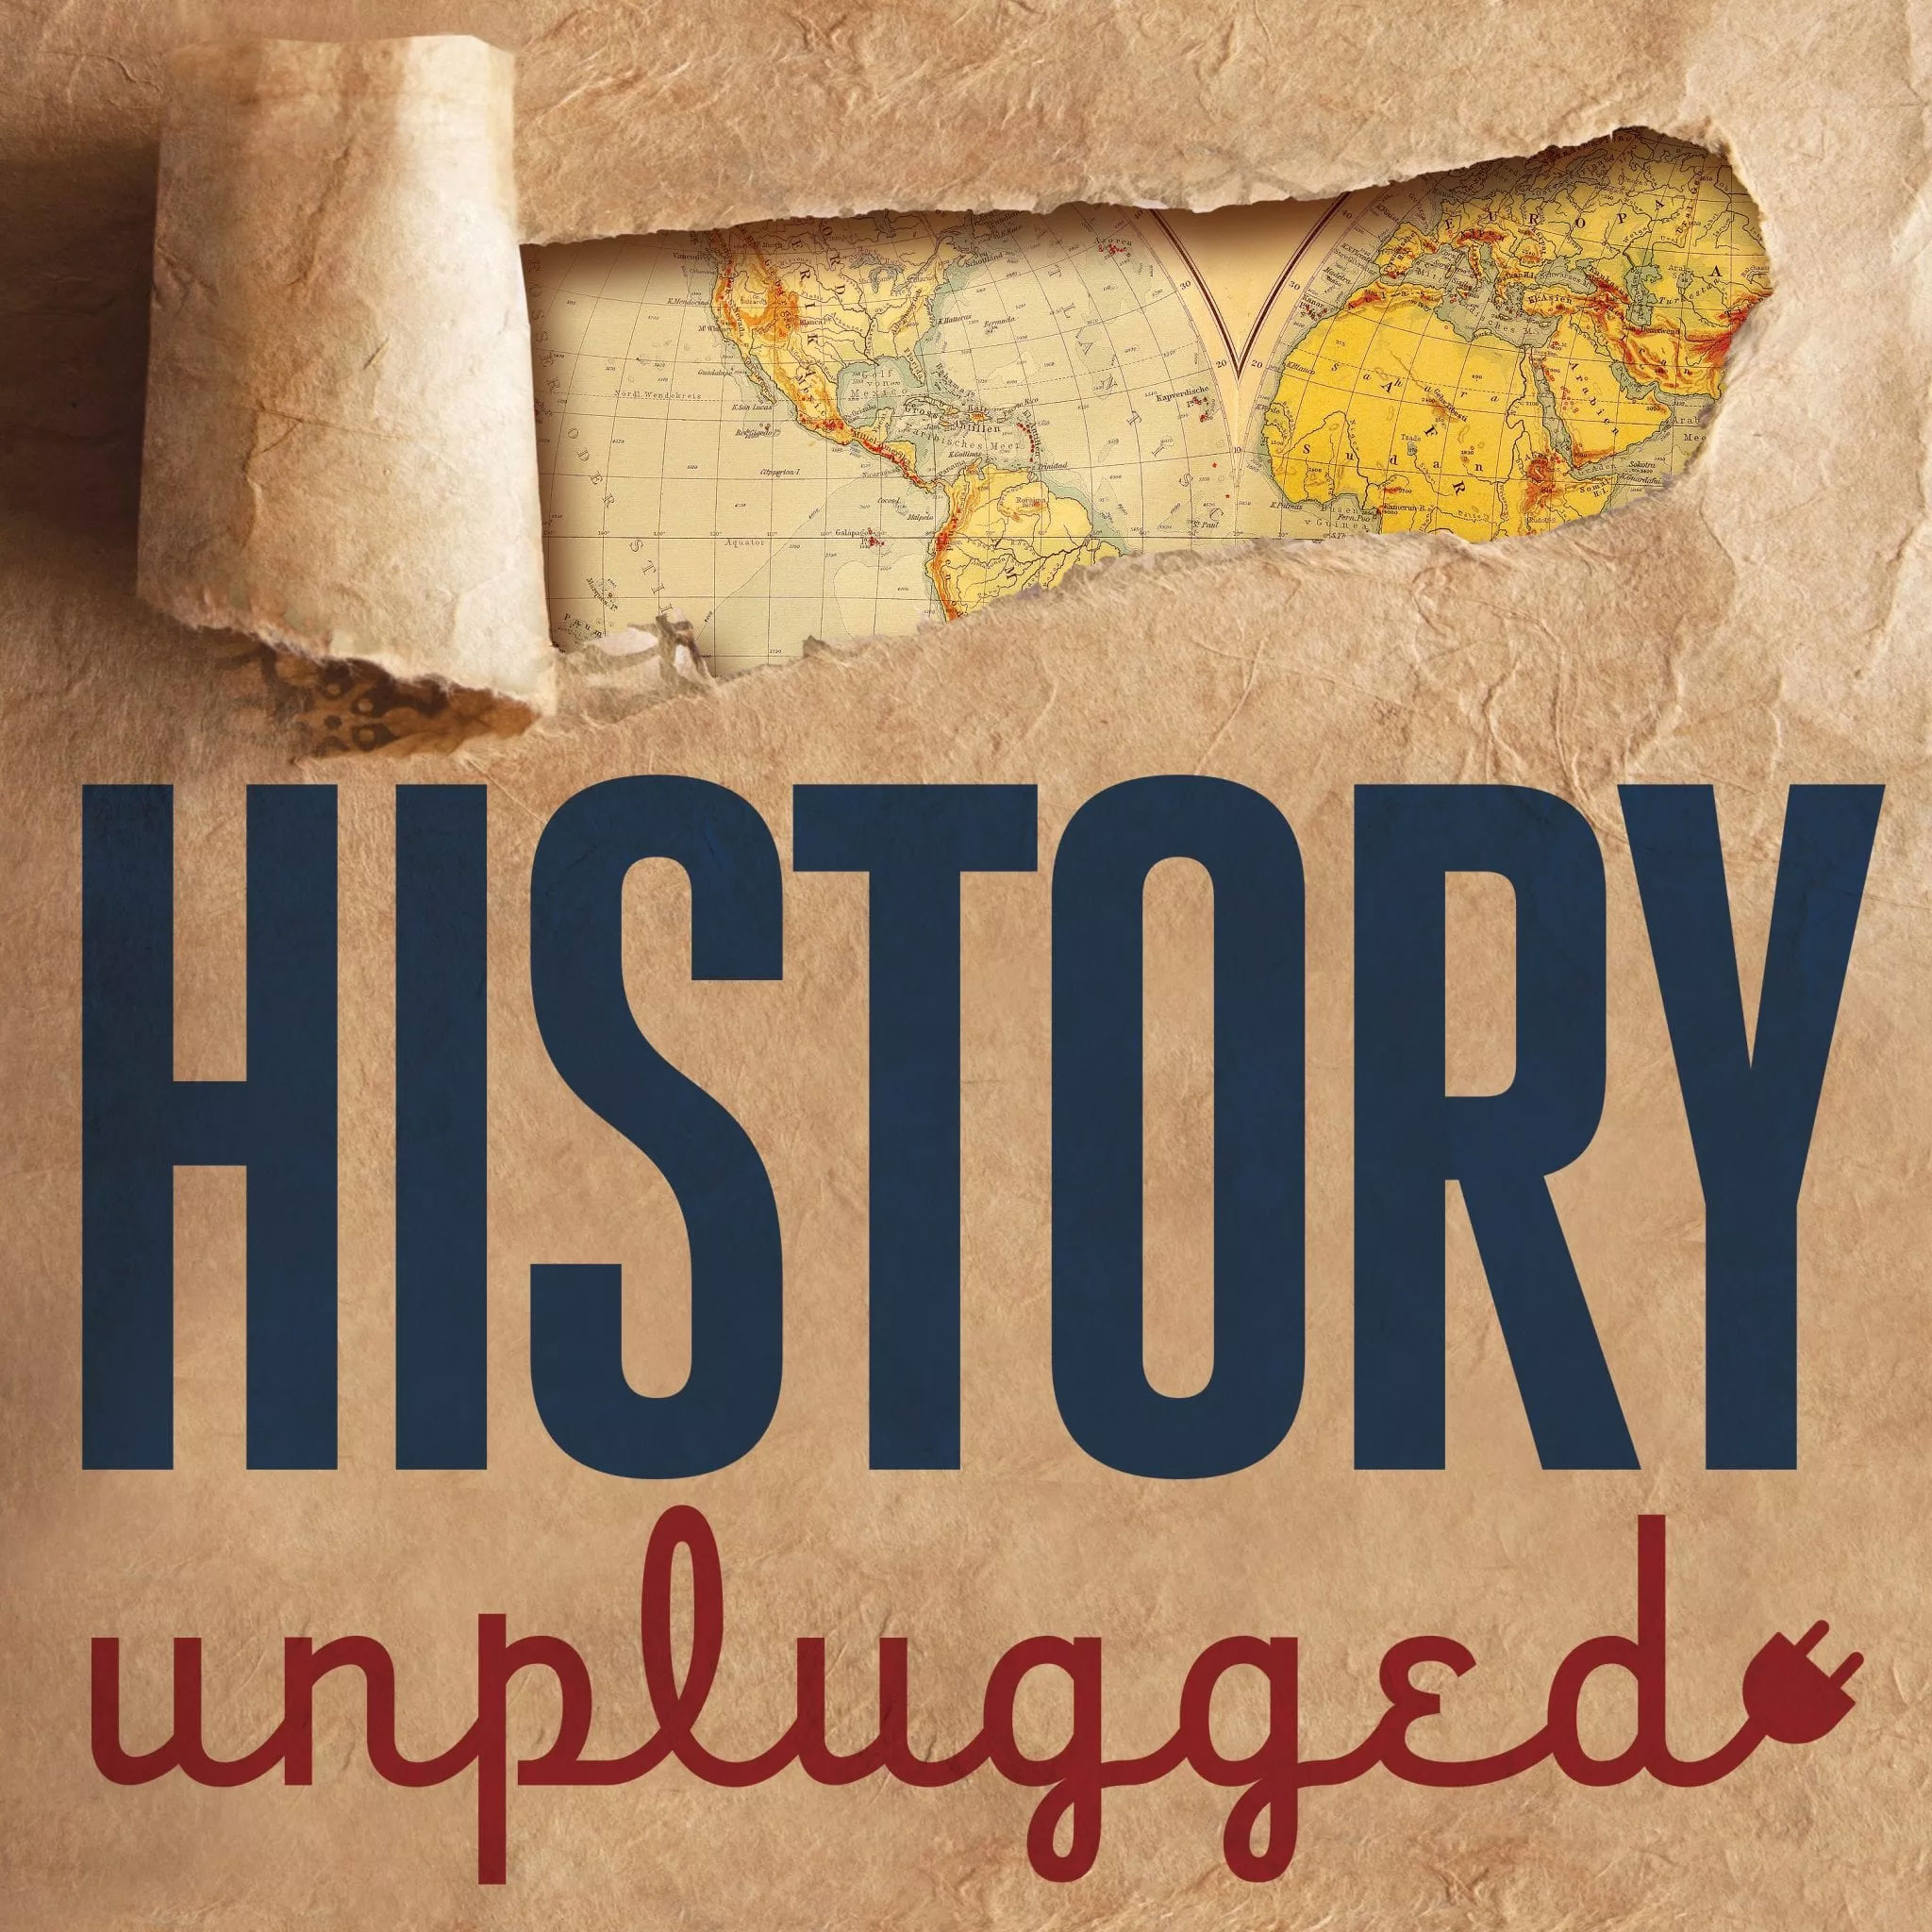 History Unplugged